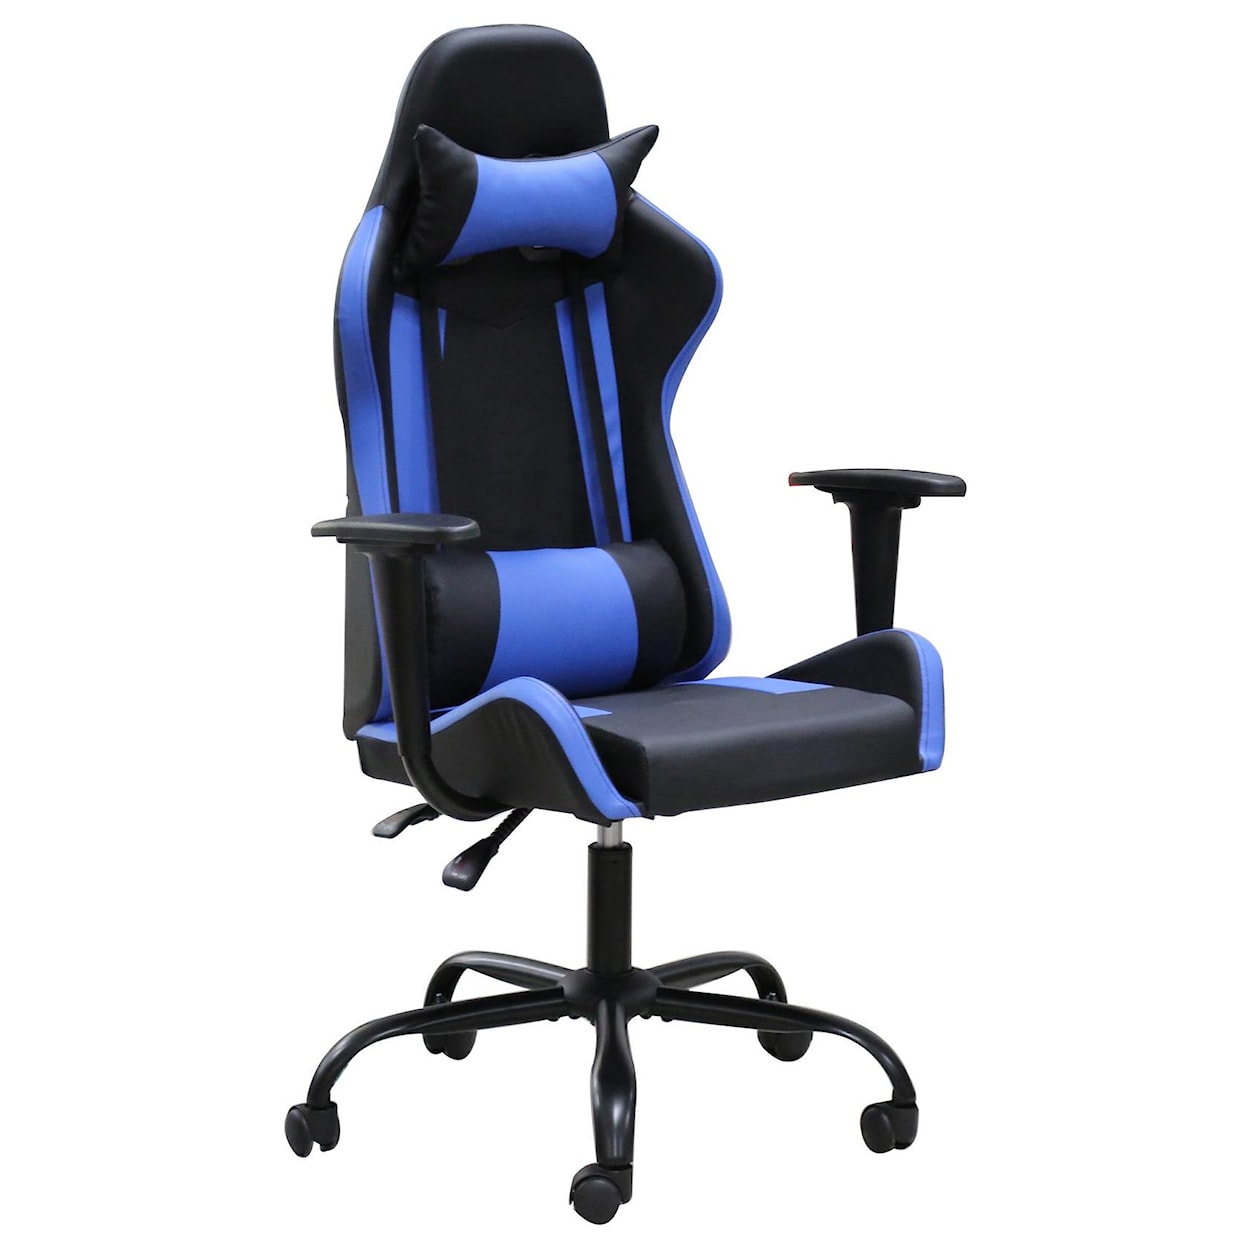 Primo International Gamer201 Gamer Chair Black and Blue